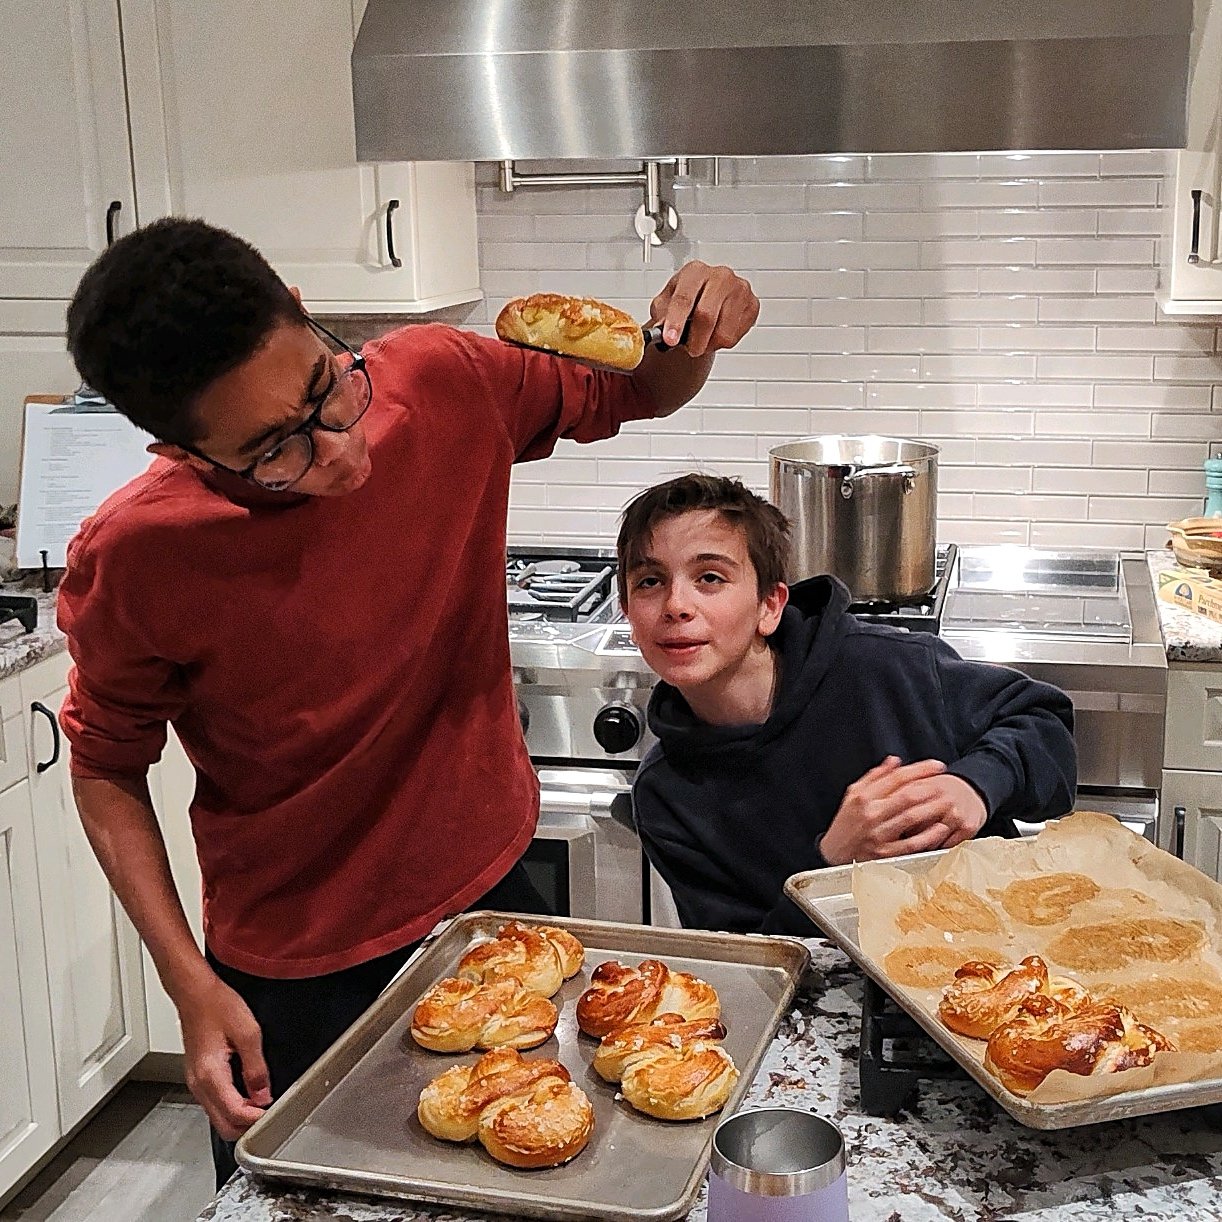 kids baking pretzels at home.JPG